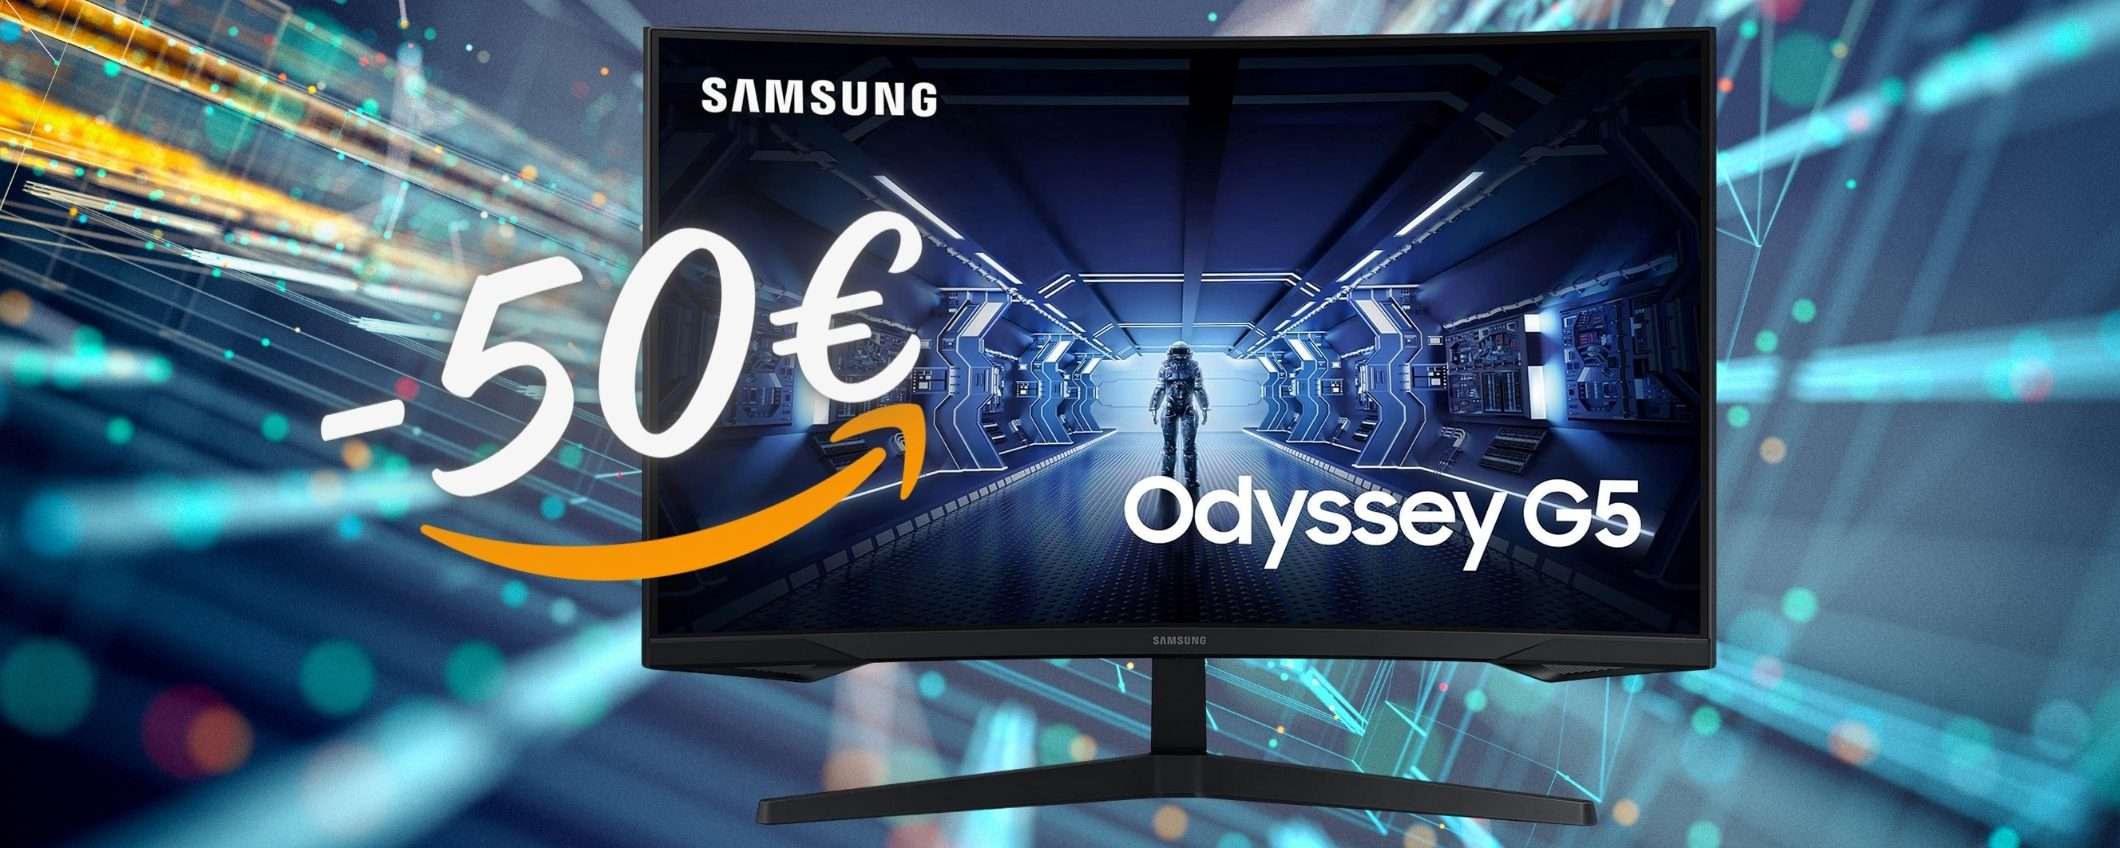 Samsung Odyssey G5: monitor gaming TOP al MINIMO STORICO (-16%)